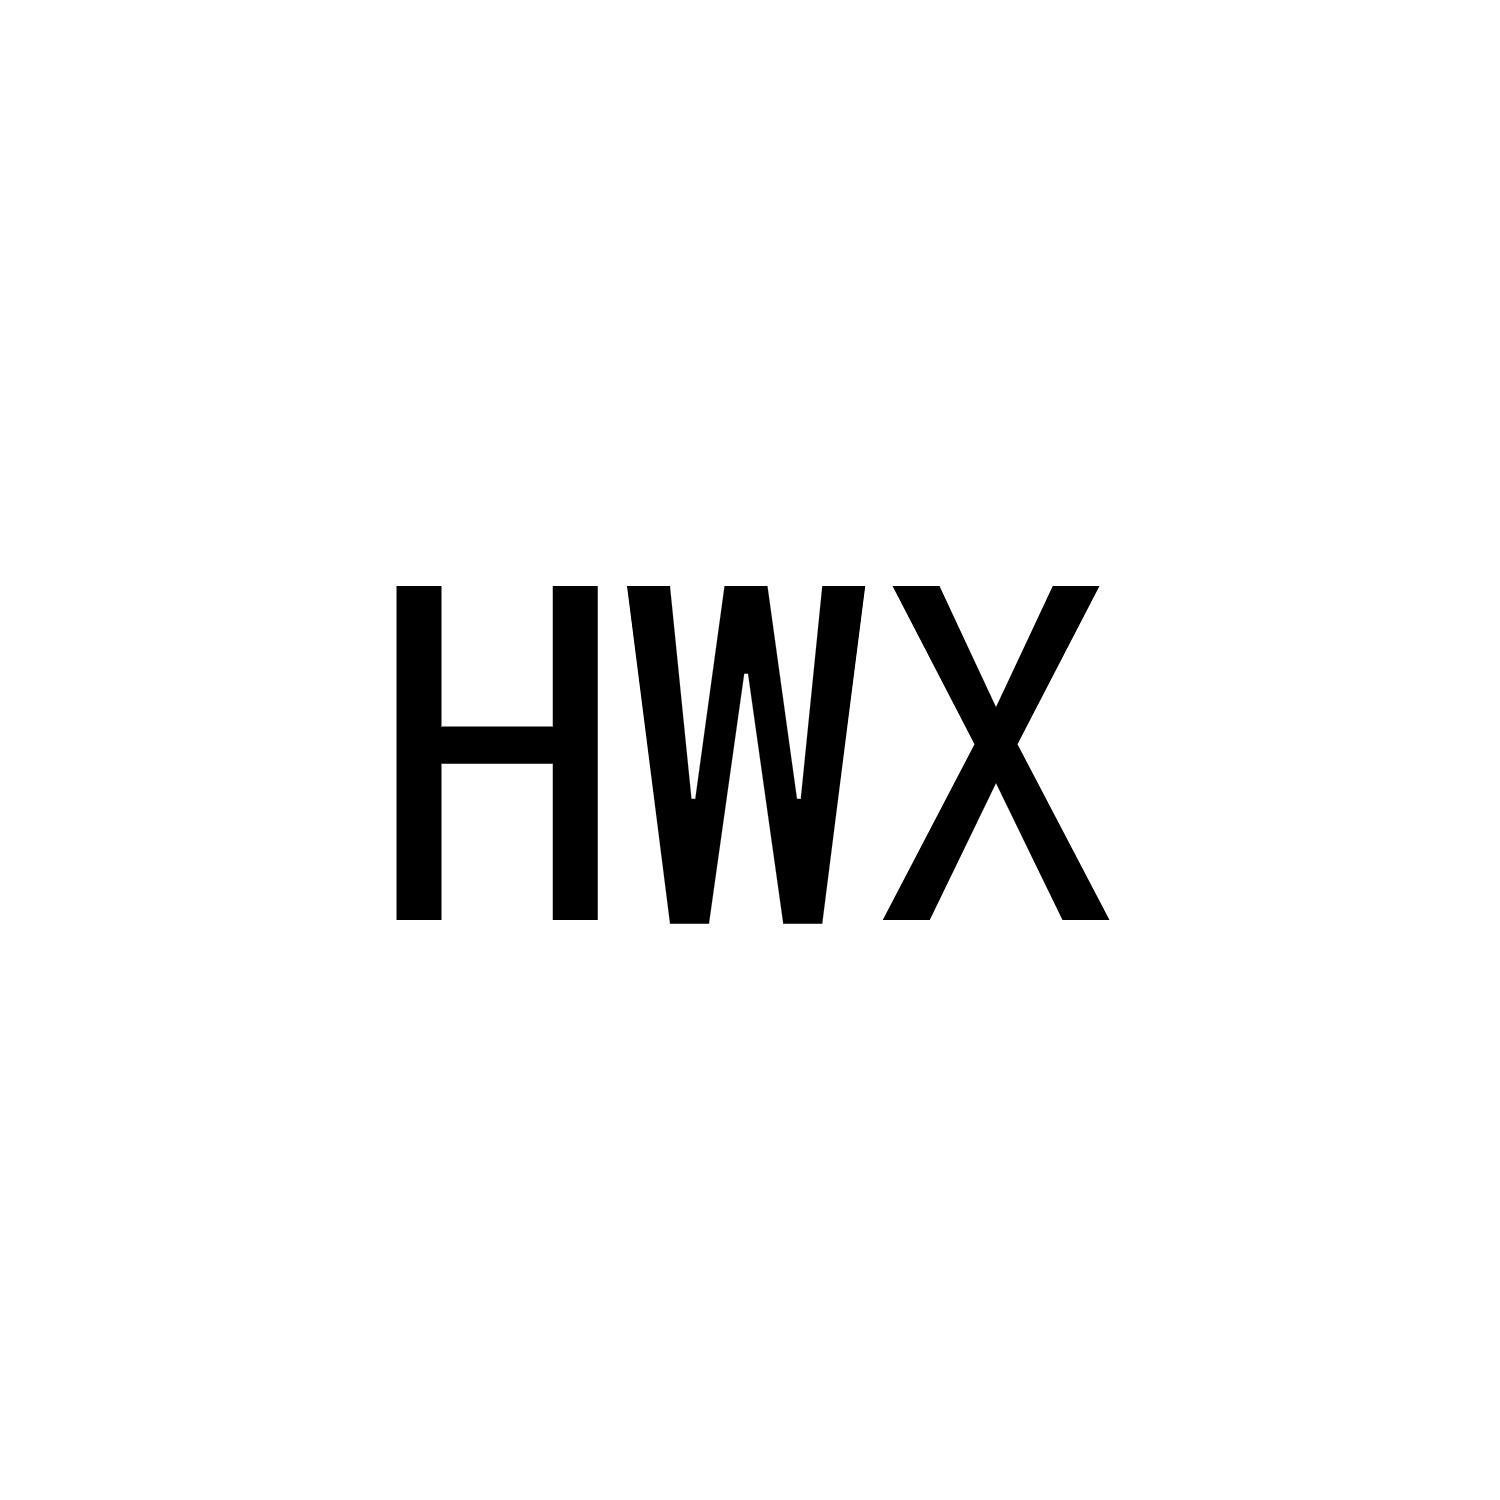 HWX